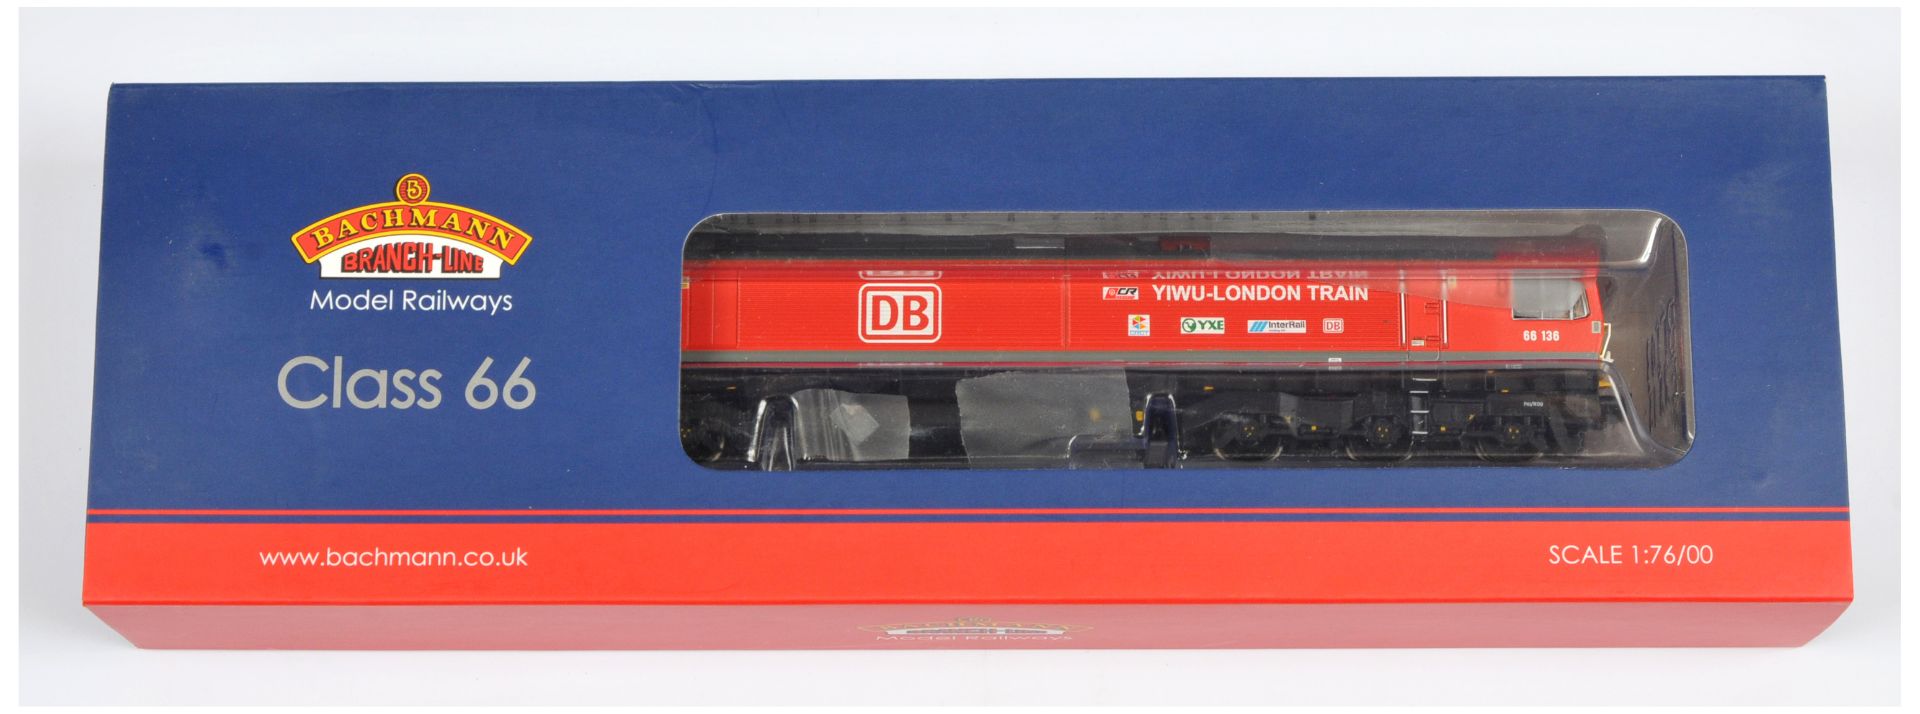 Bachmann OO Gauge 32-738Z Class 66 DB Cargo Diesel Locomotive No. 66136 "Yiwu-London Train", prod...